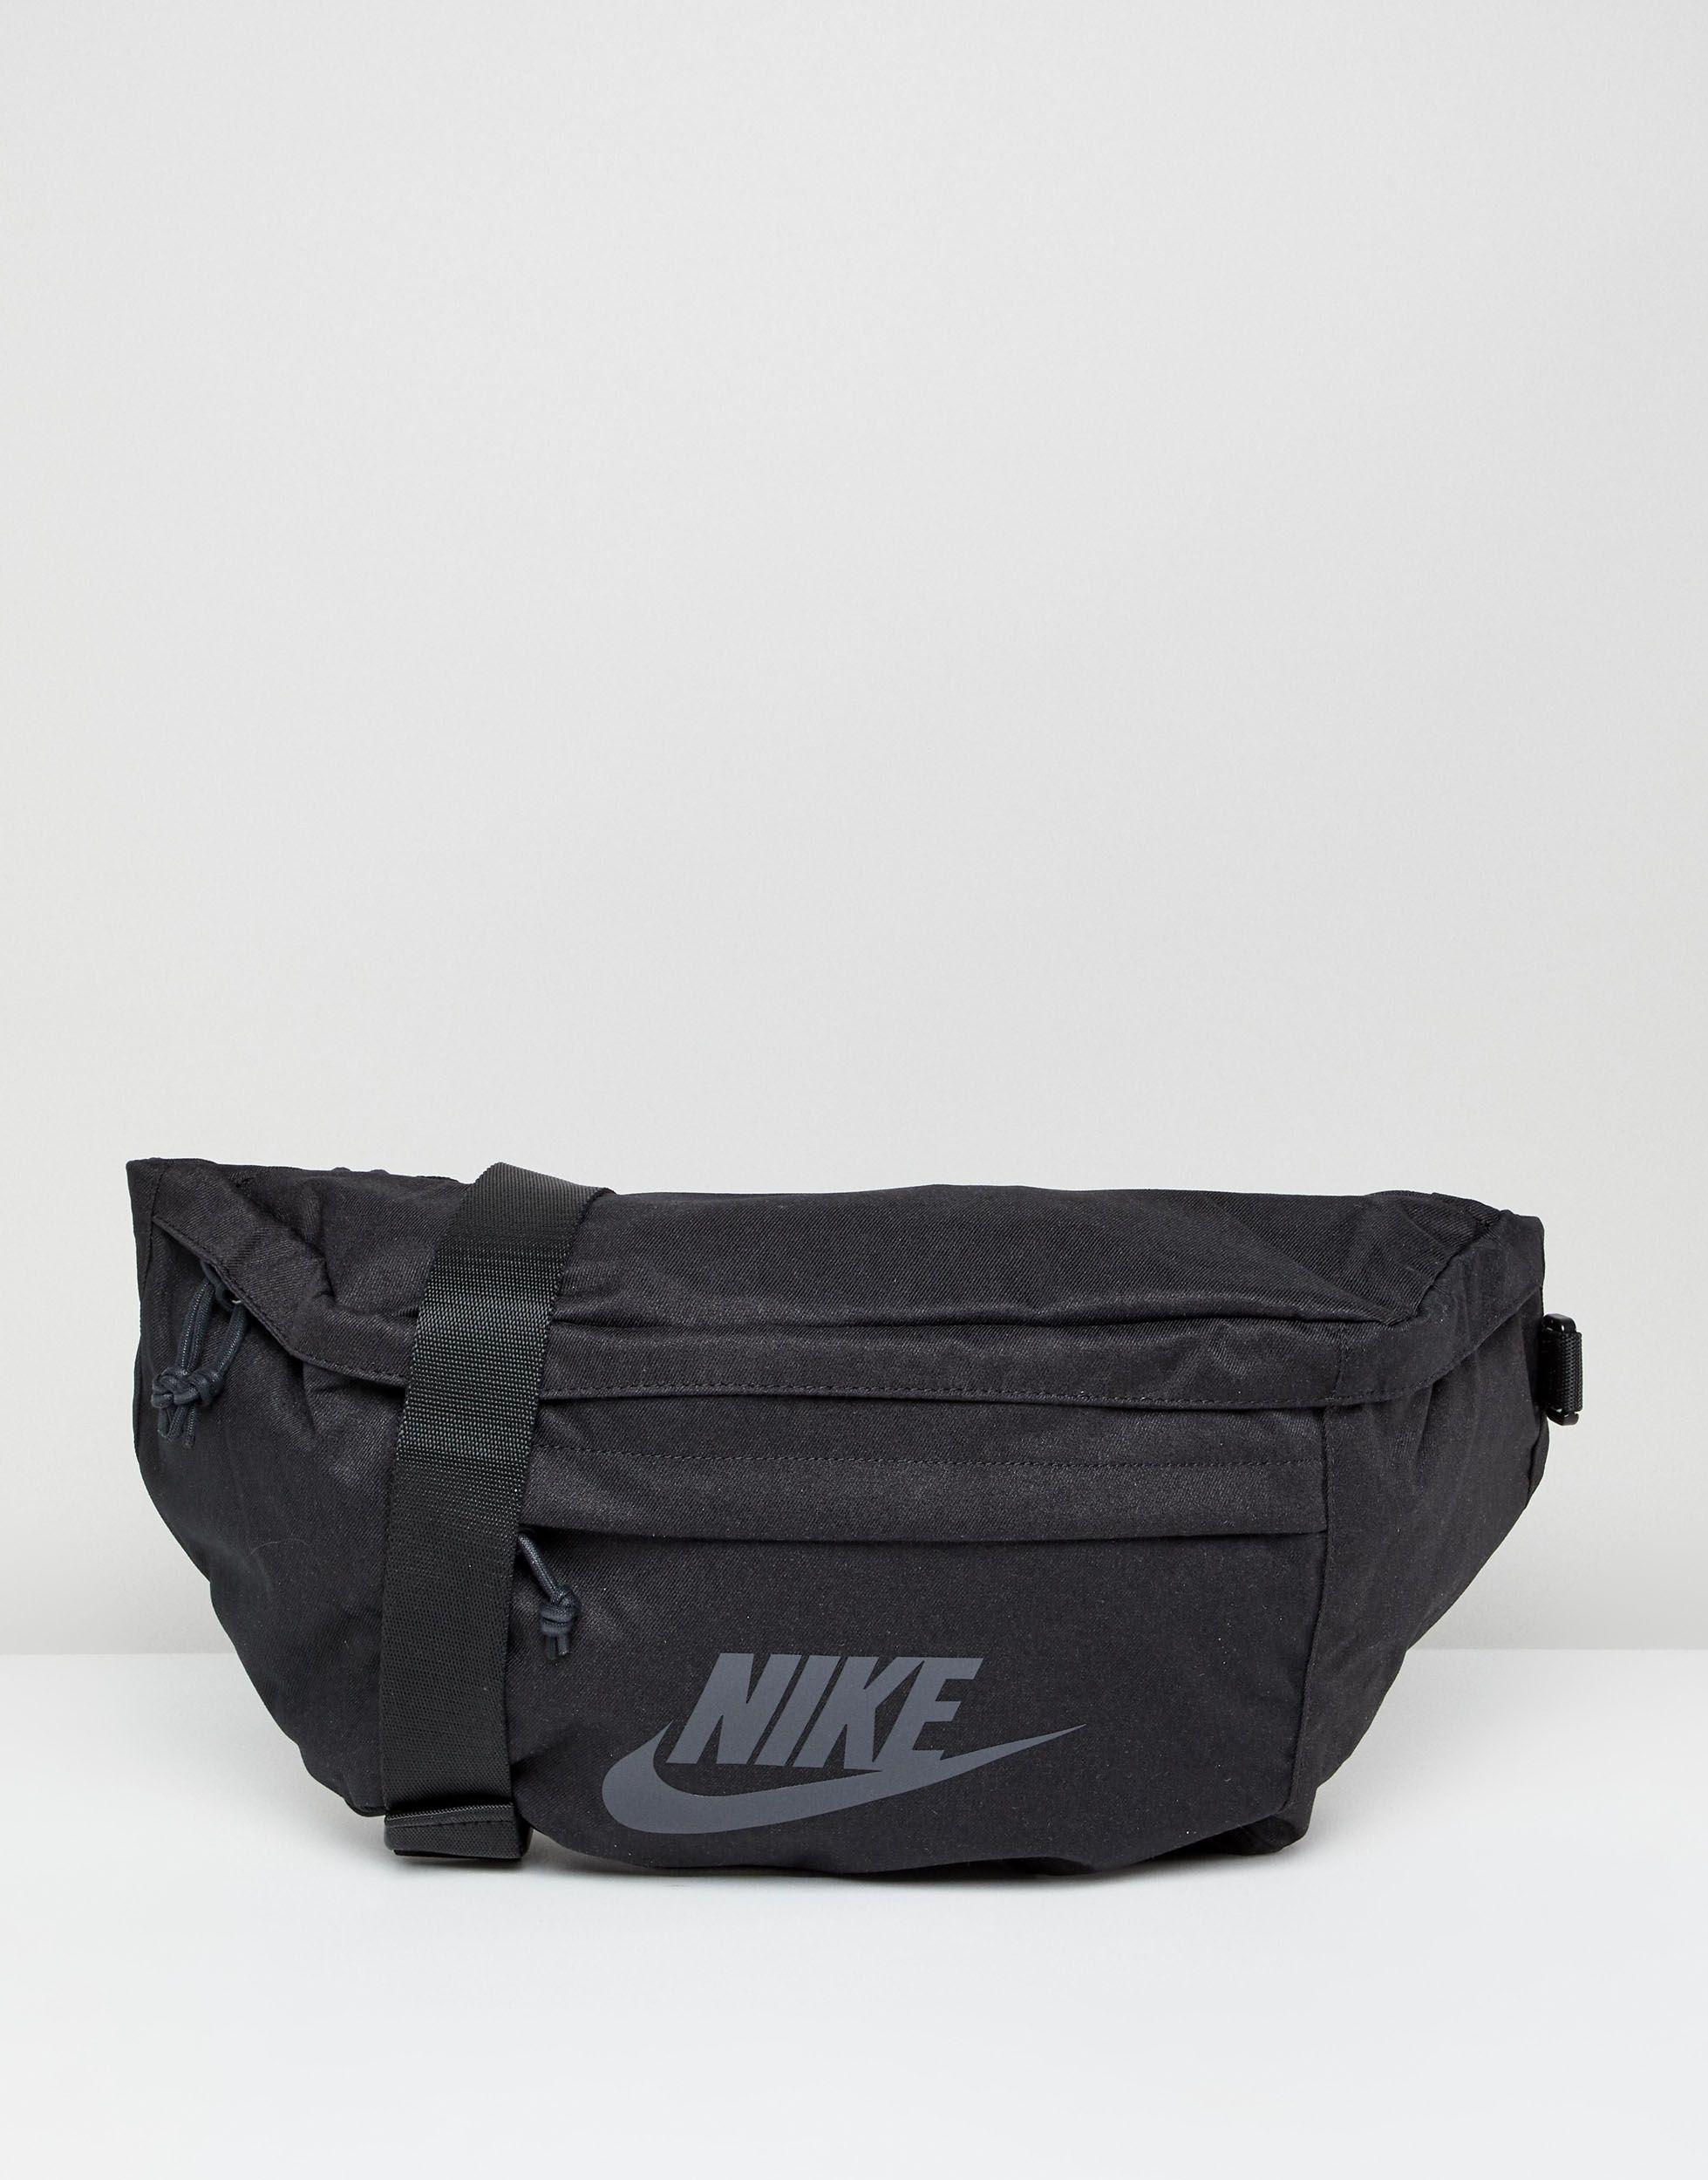 Nike Lab X Rt Hip Bag In Black For Men Lyst